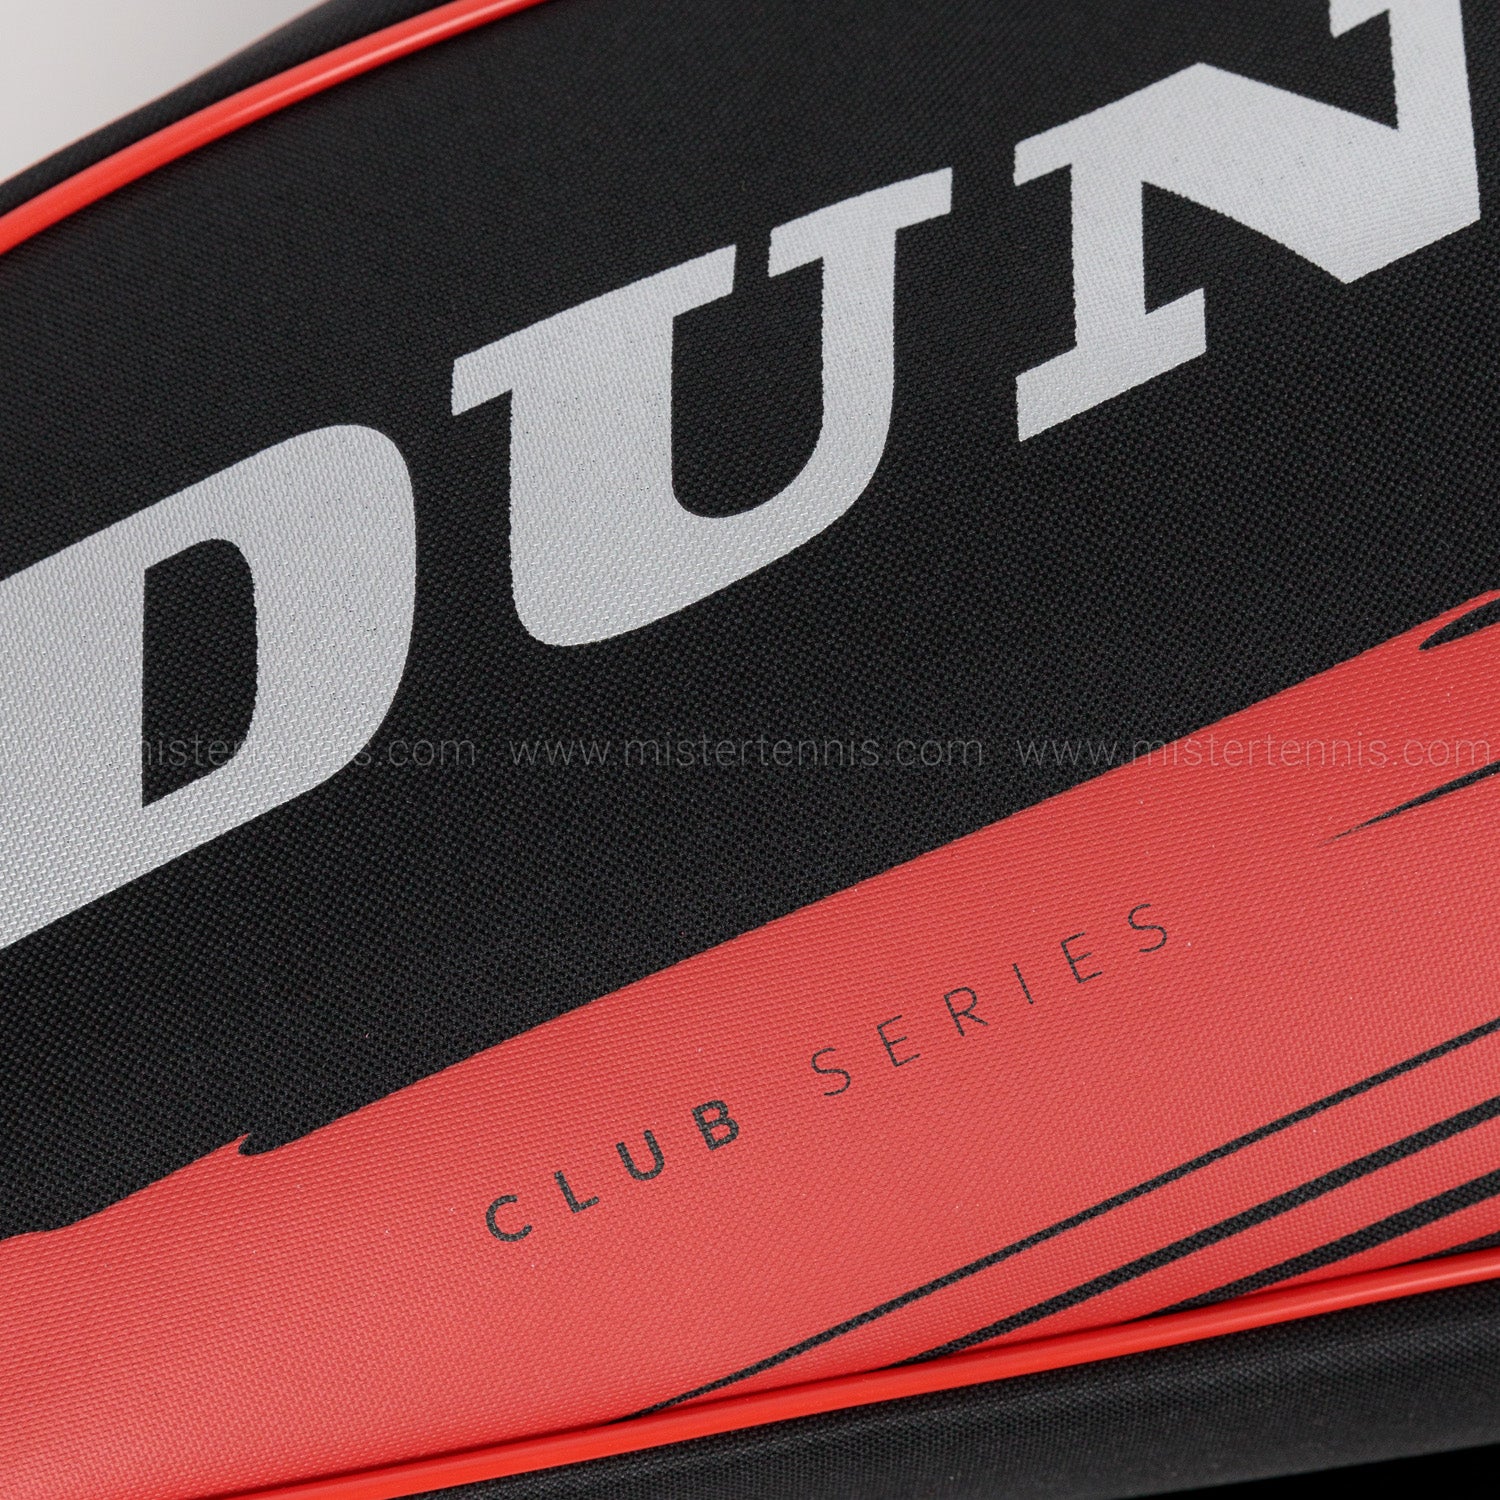 Dunlop CX Club 6 Tennis Racket Bag